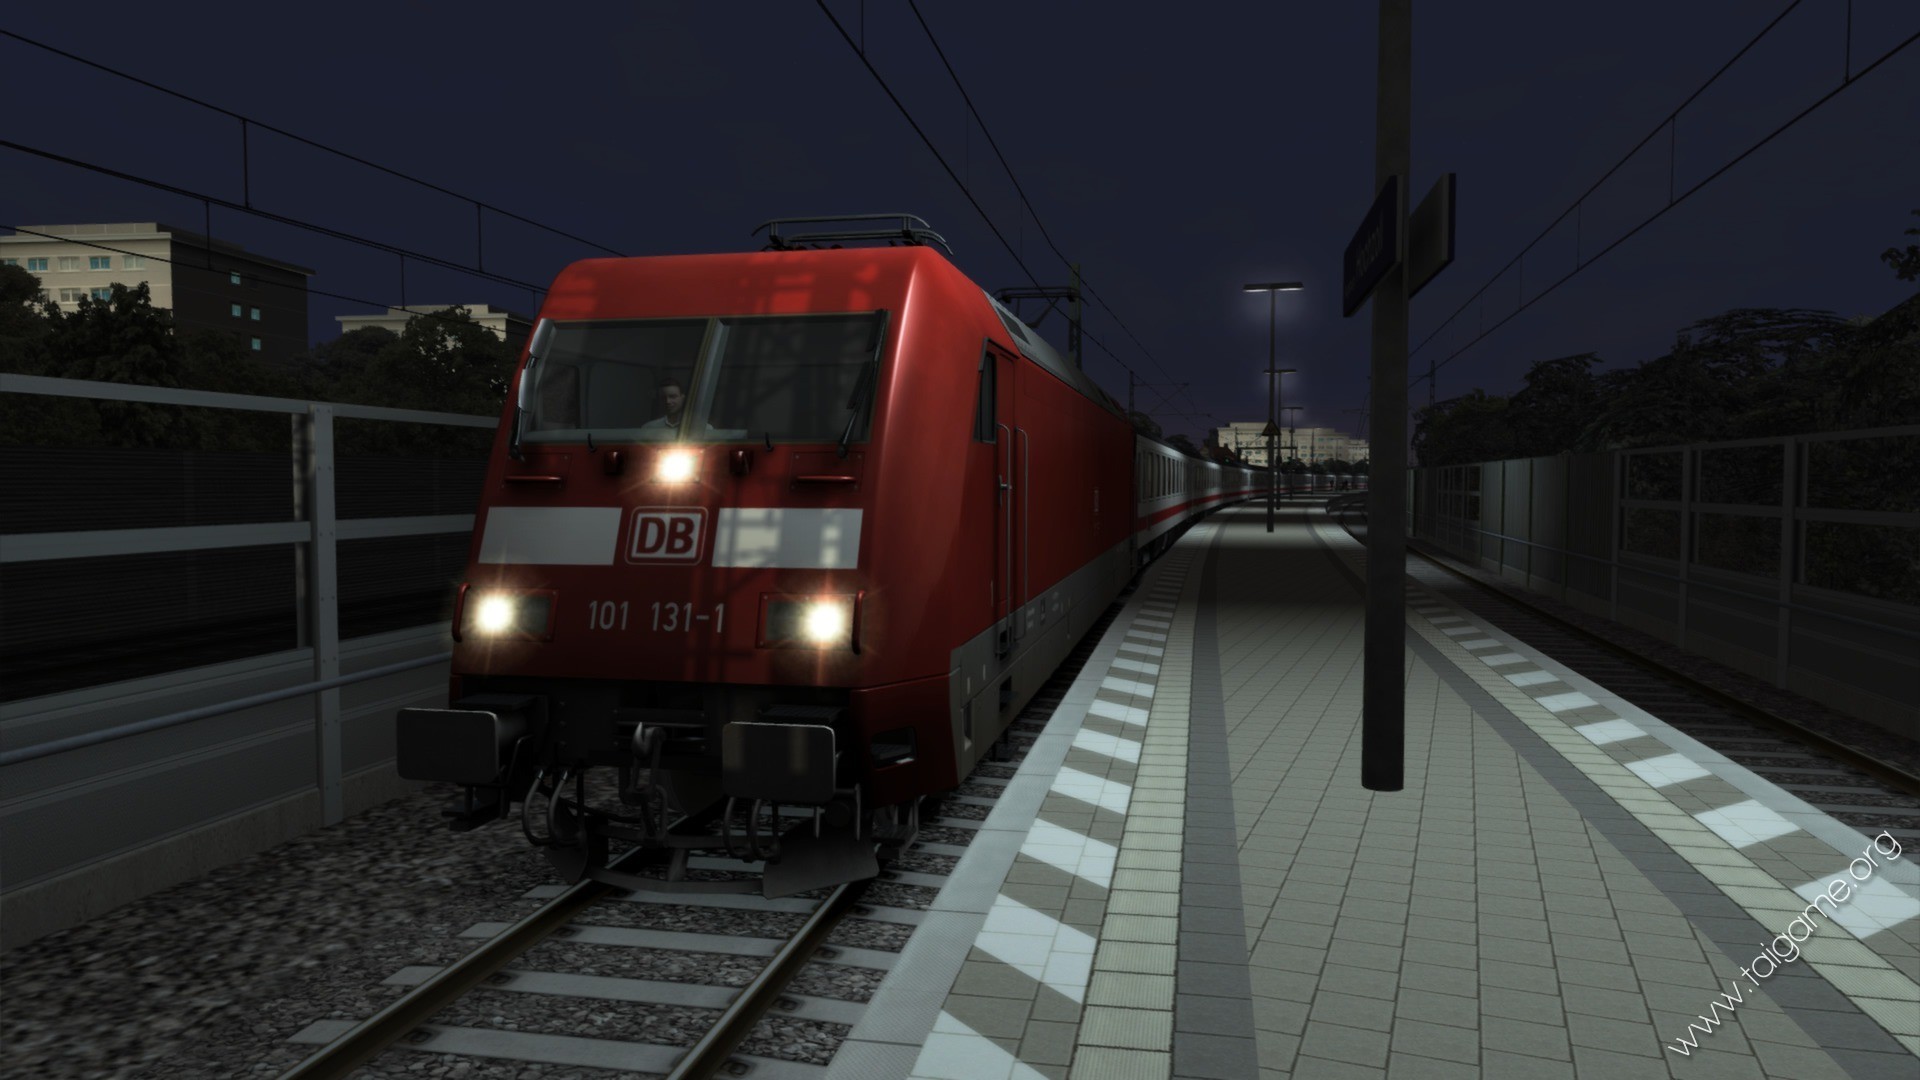 train simulator world free download